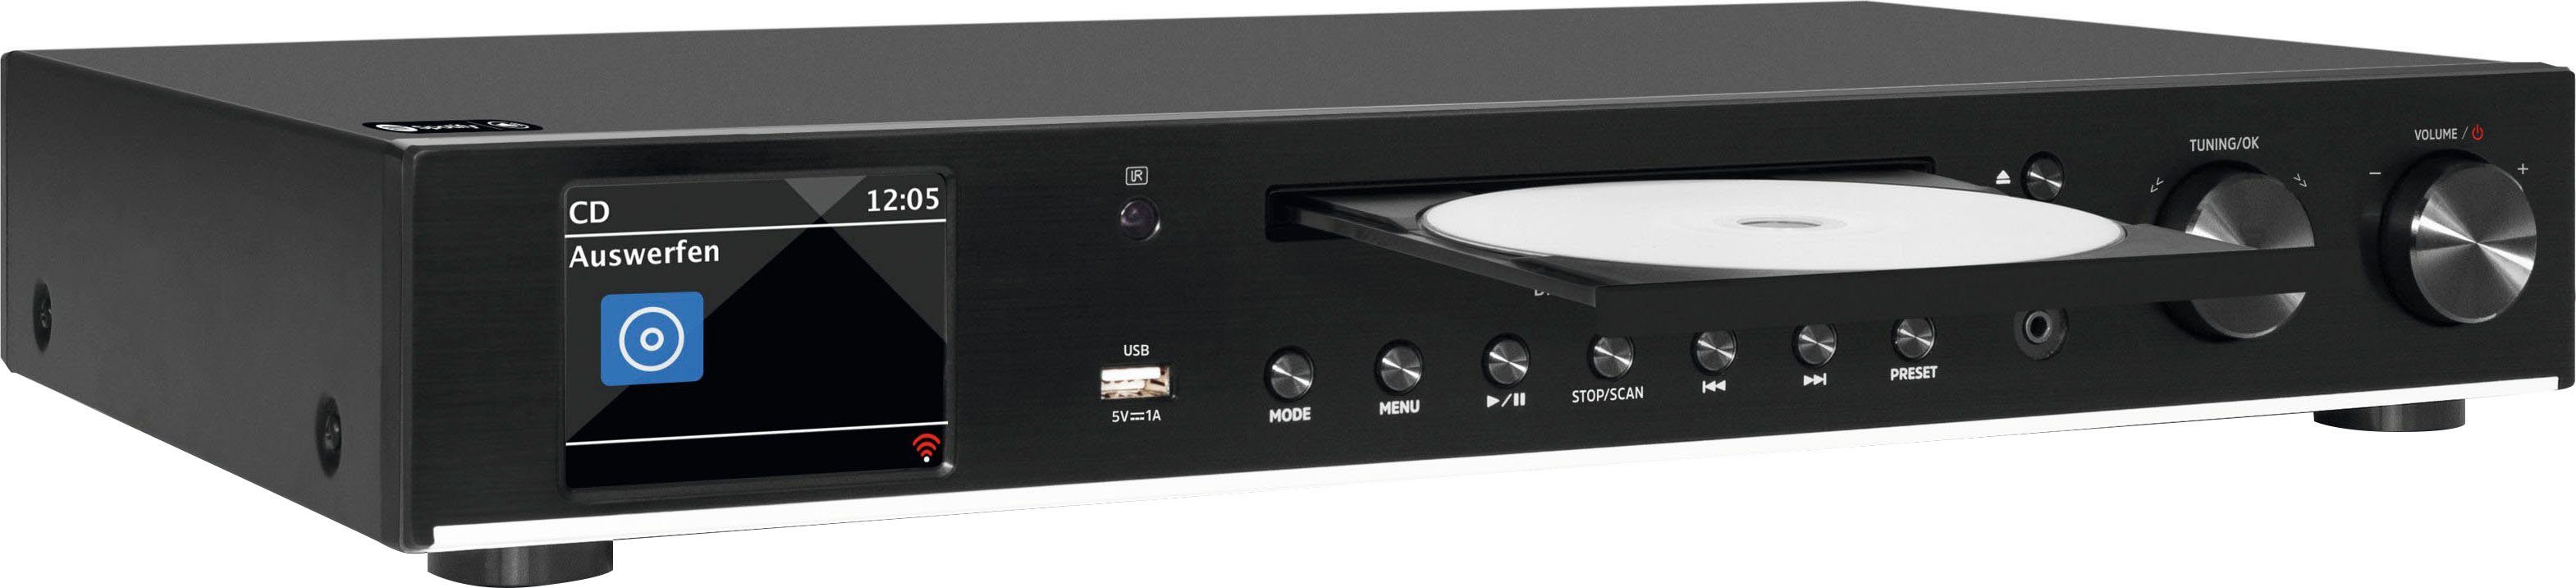 Internetradio, Digitalradio (DAB), TechniSat mit 143 (DAB) RDS) schwarz CD UKW (V3) DIGITRADIO (Digitalradio